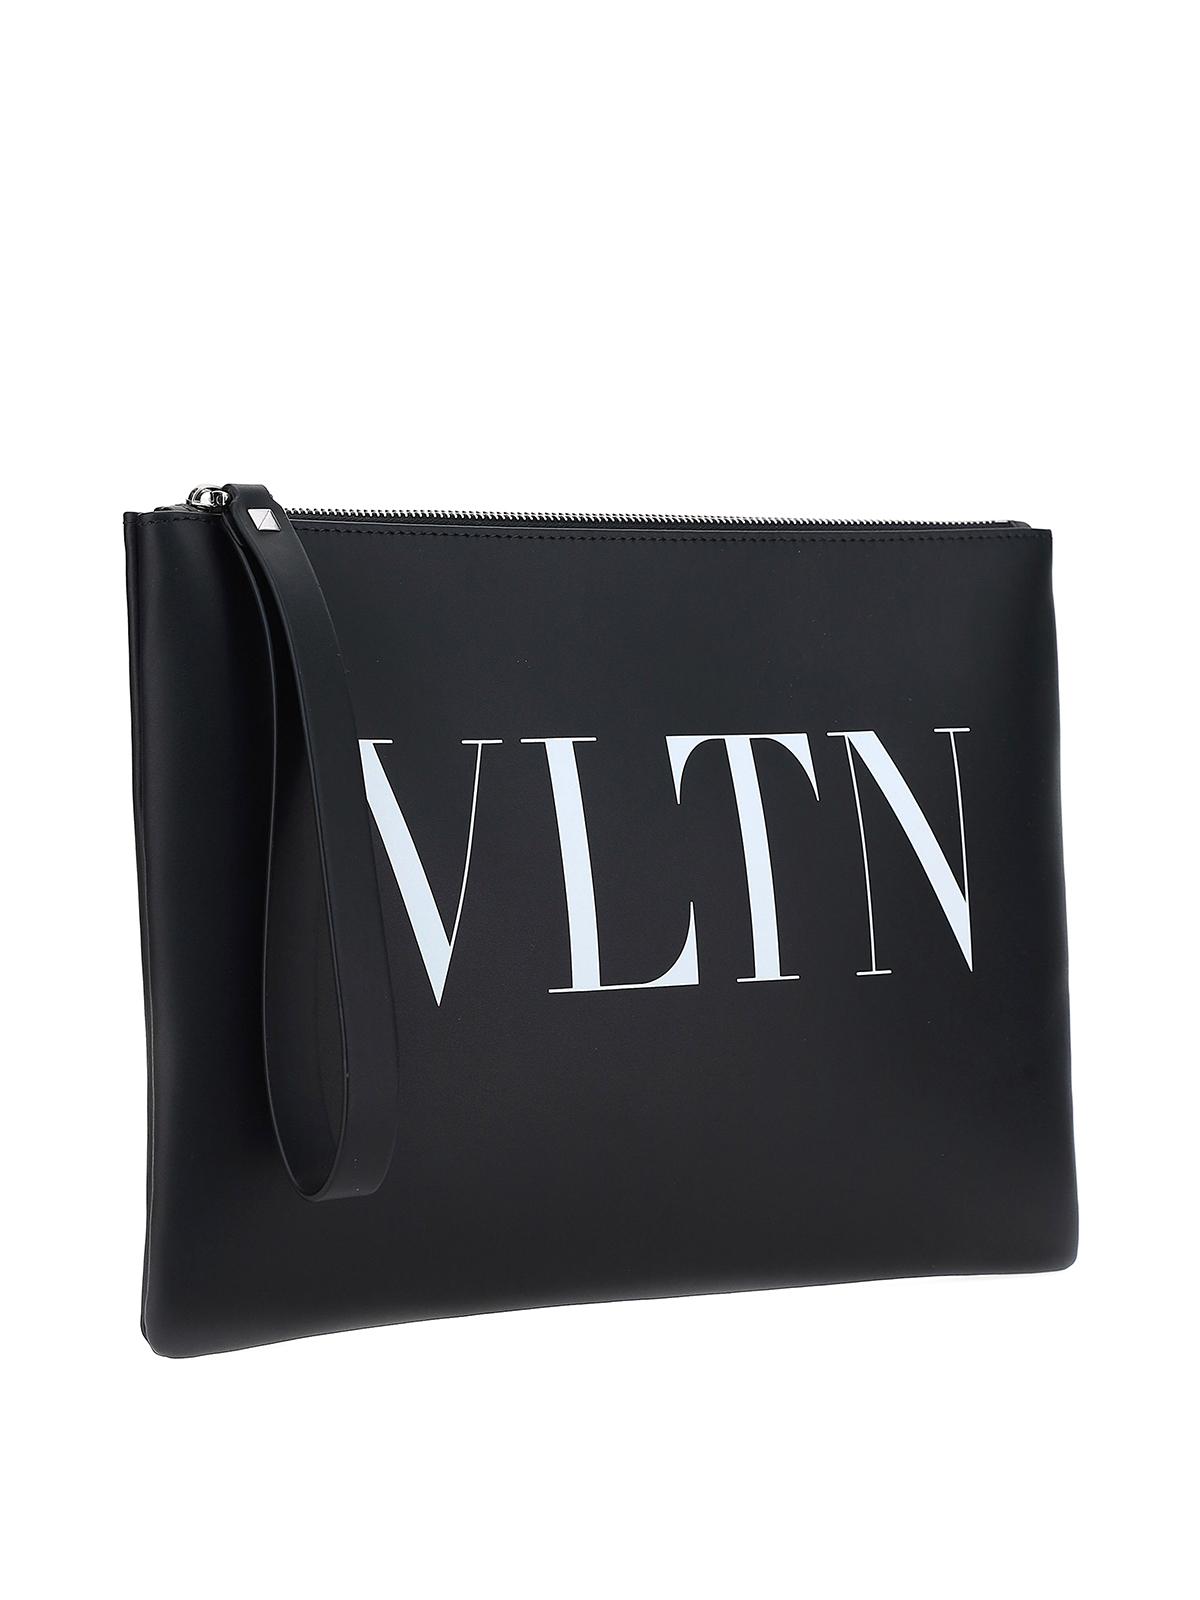 Valentino Garavani Vltn-logo Leather Pouch in Black for Men - Save 55% ...